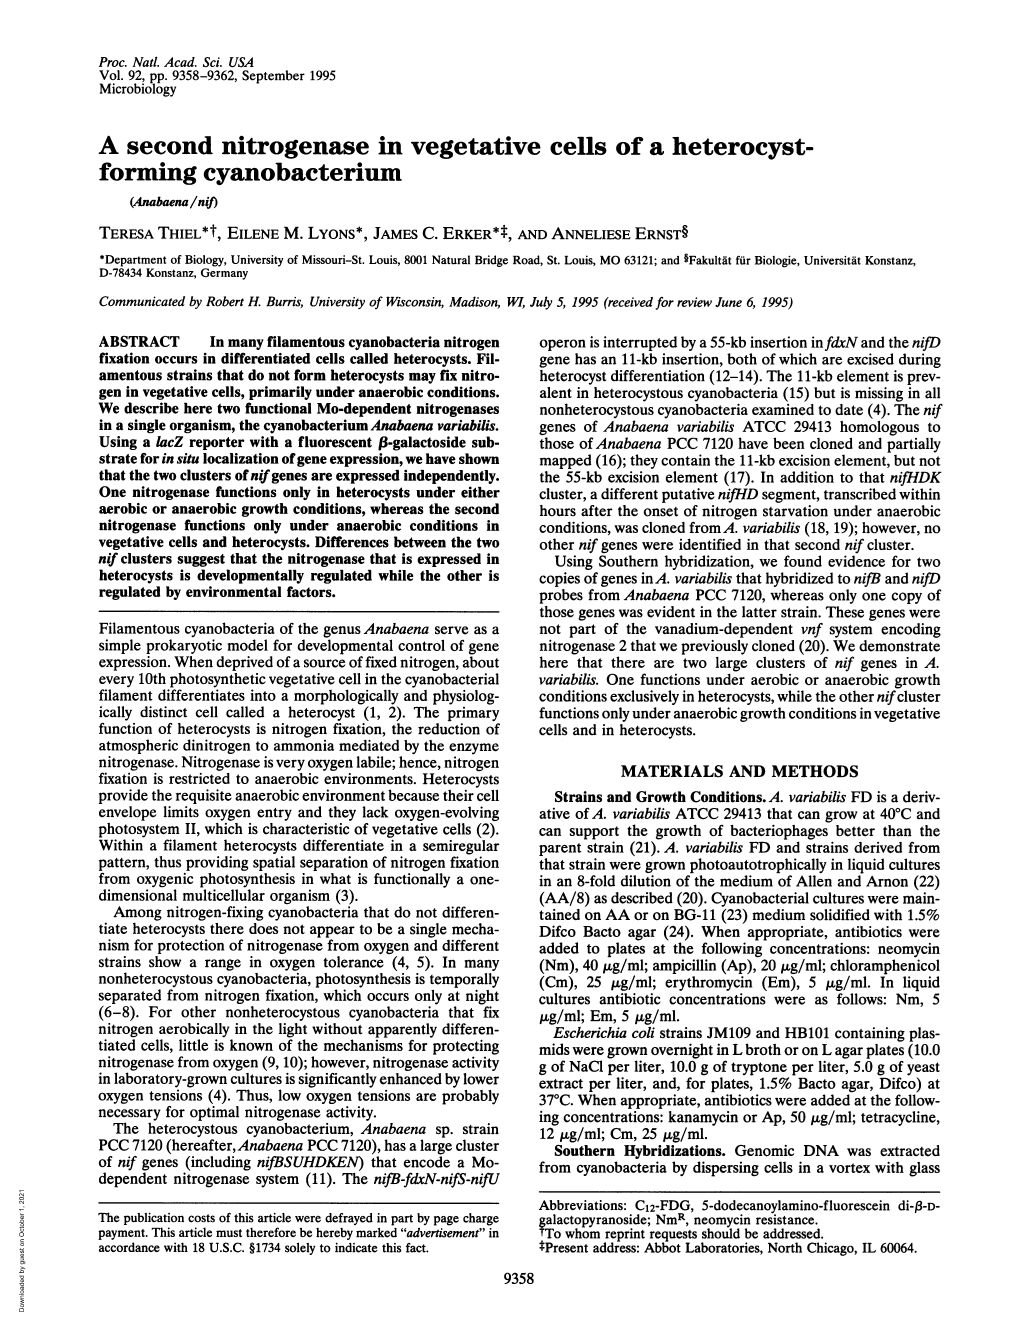 Forming Cyanobacterium (Anabaena/Nif) TERESA THIEL*T, EILENE M